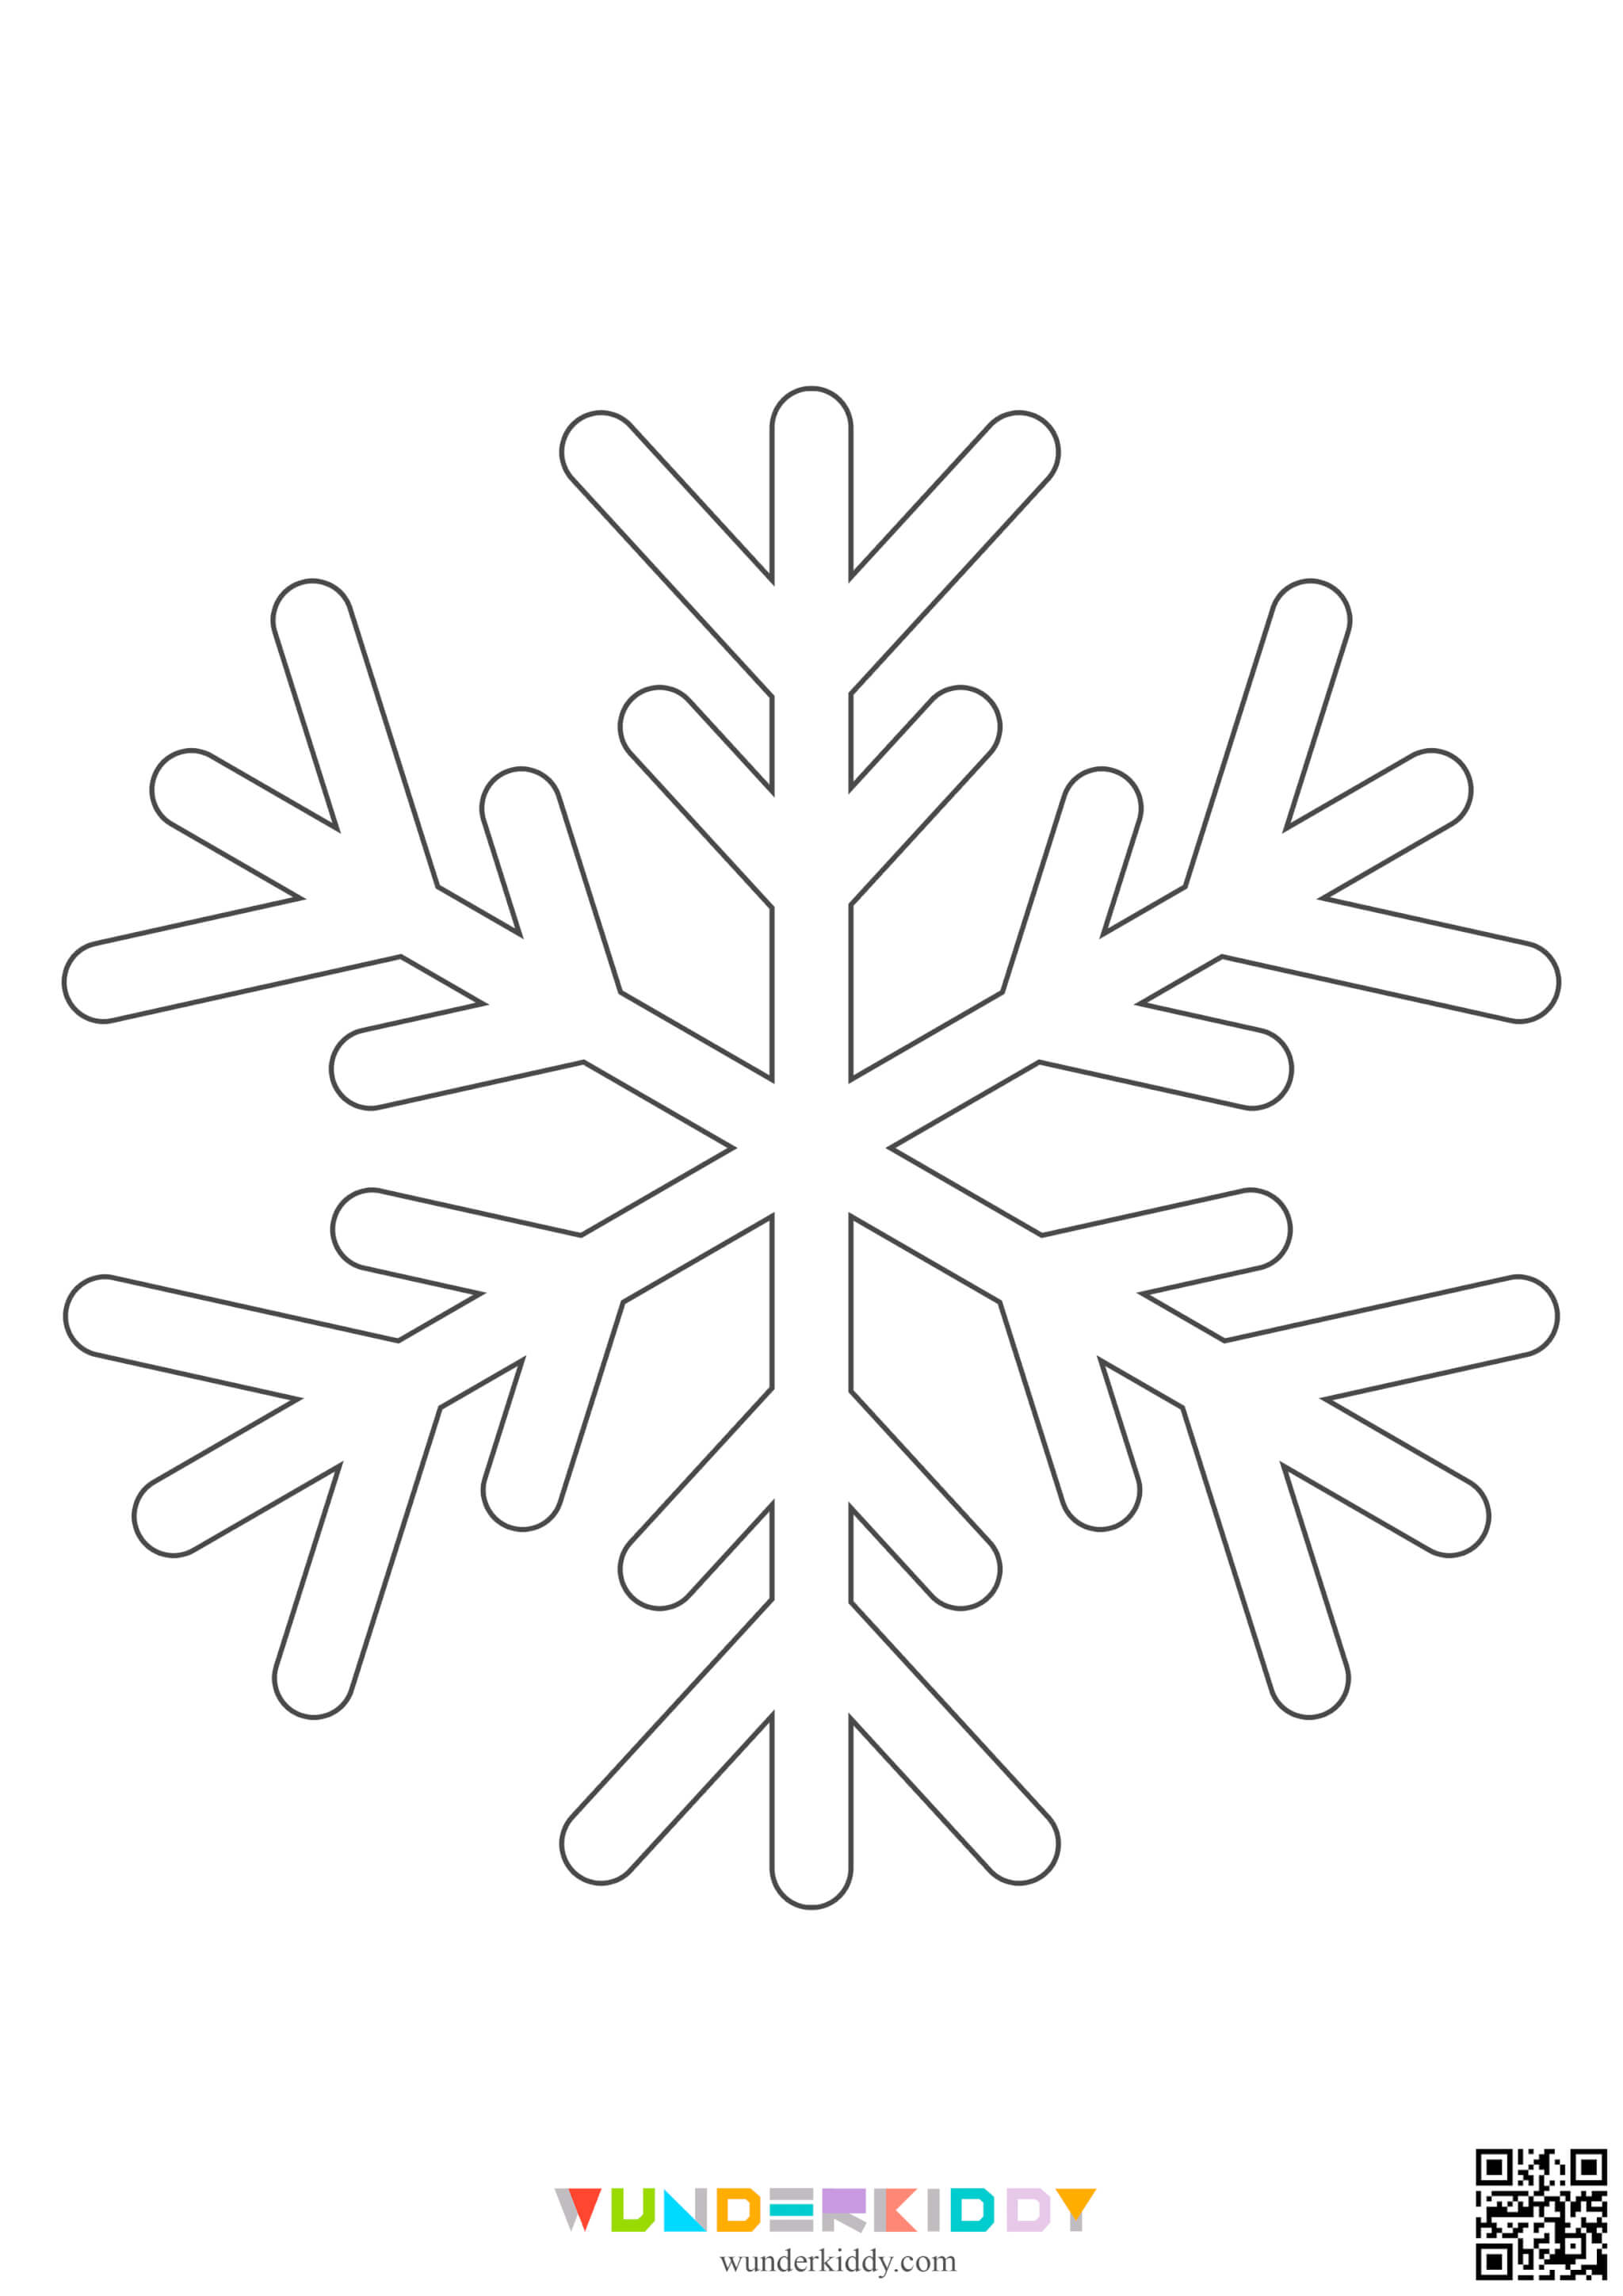 Snowflake Stencil Patterns - Image 15